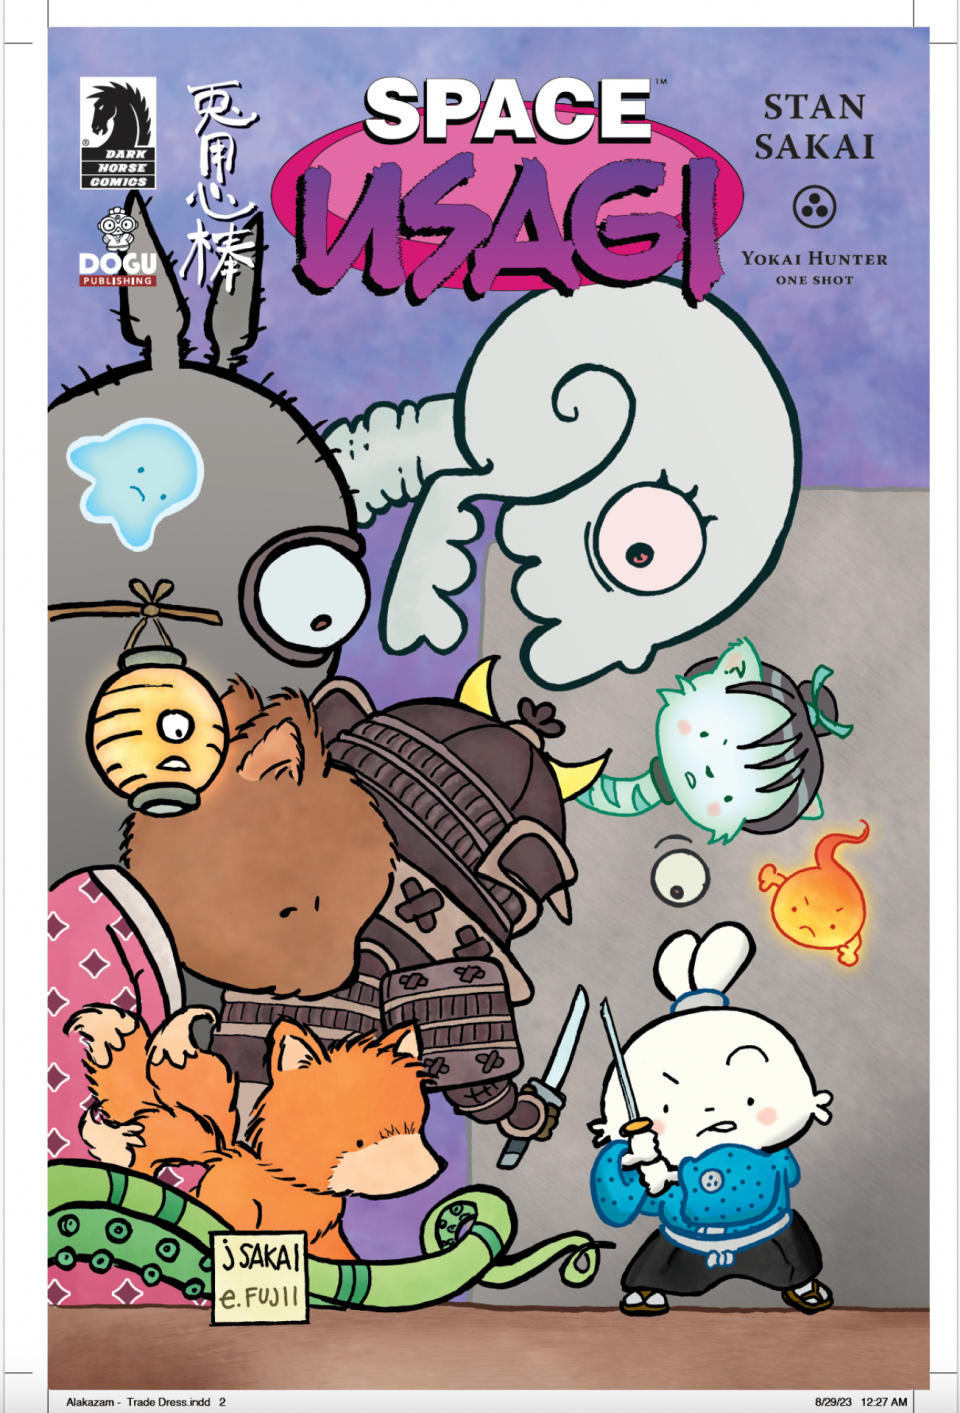 Space Usagi: Yokai Hunter #1 cover art